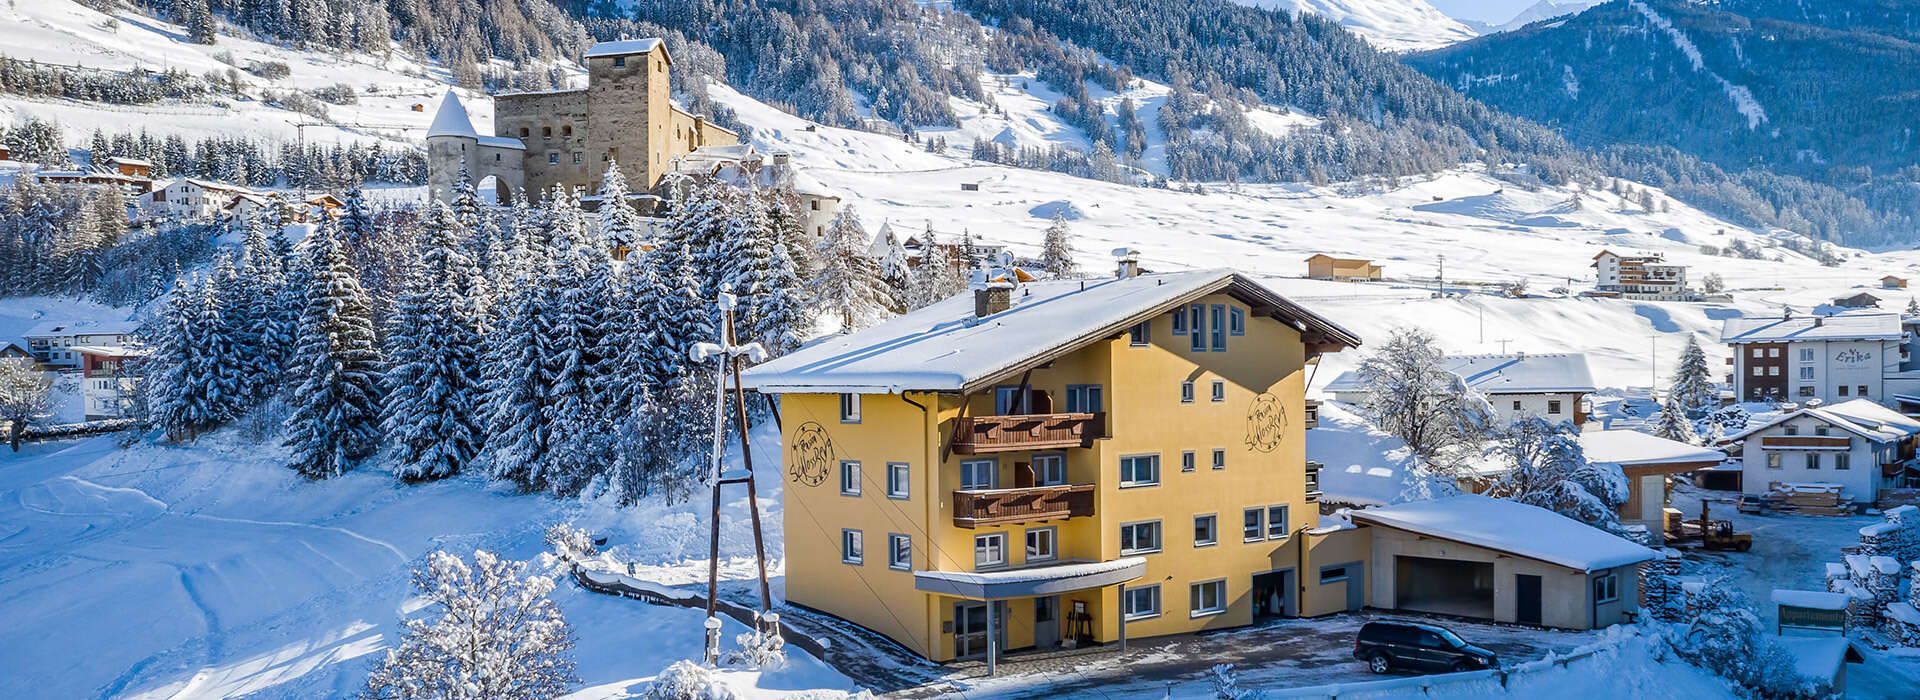 Hotel Schlossberg in winter